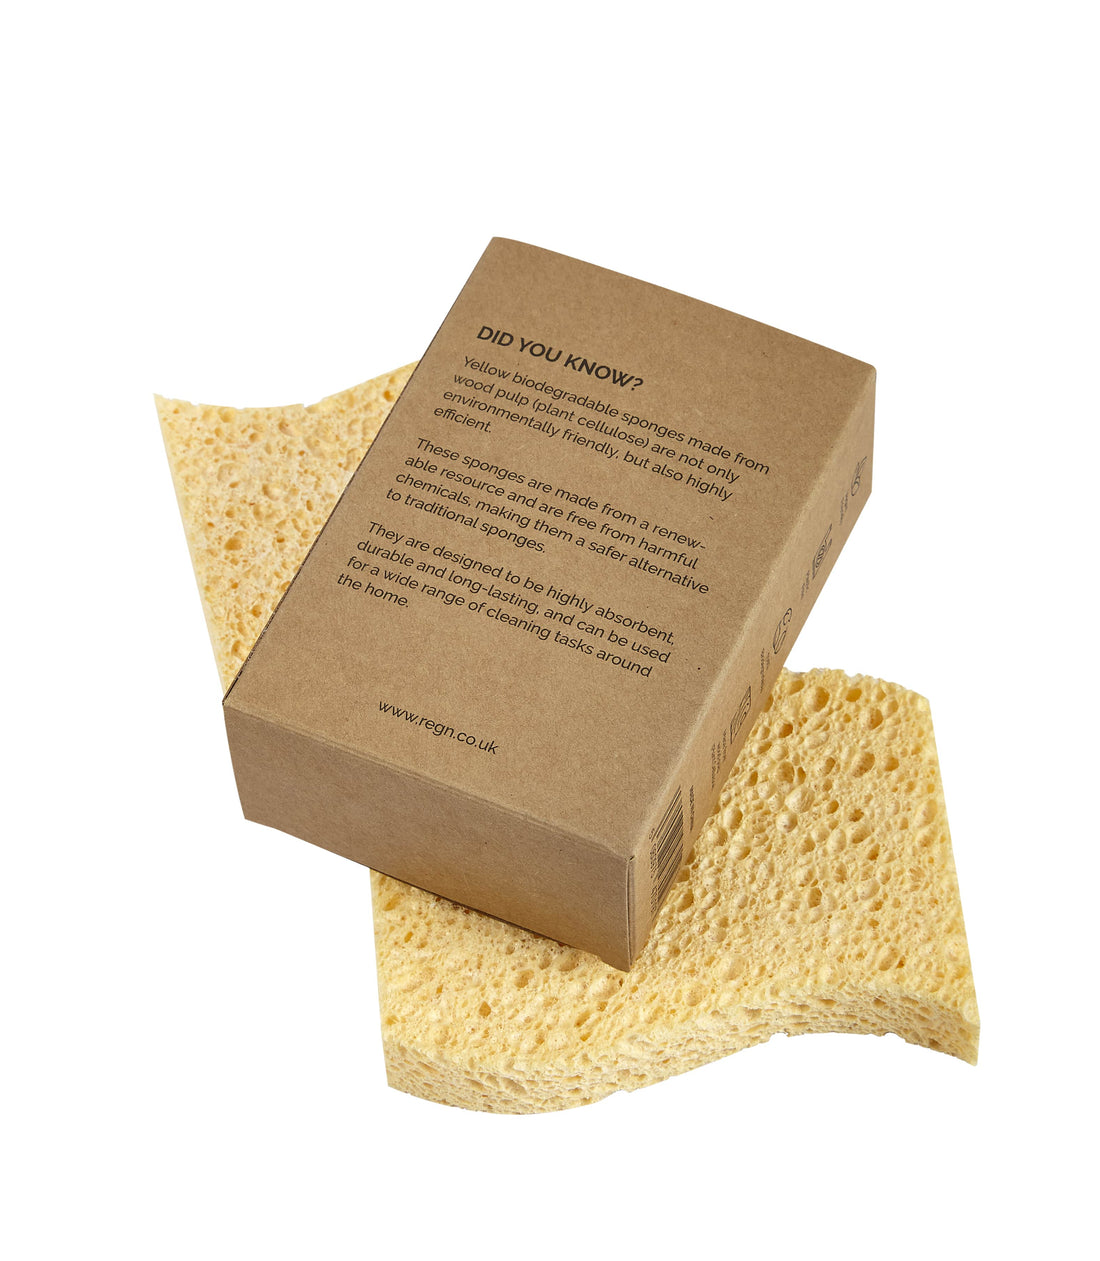 Re:gn Biodegradable Kitchen Sponges box and sponges